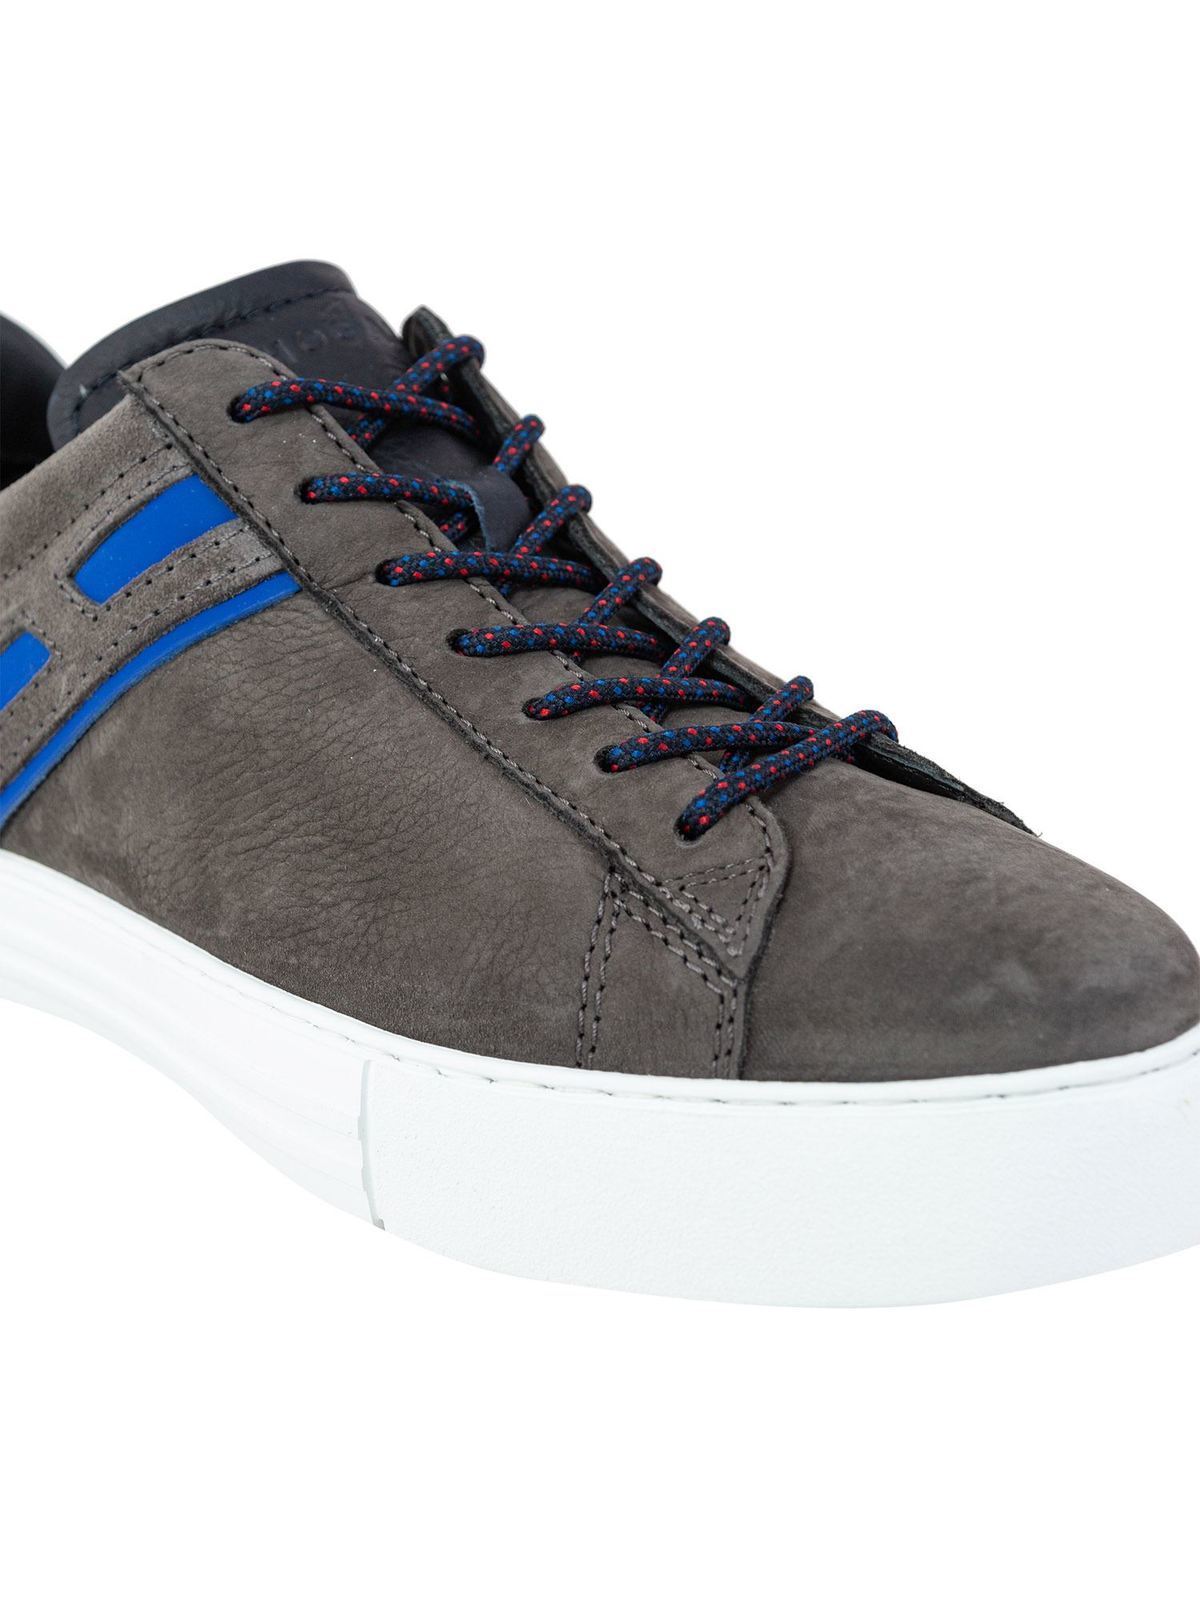 Hogan - Rebel sneakers in grey - trainers - HXM5260CW00OD6297T | iKRIX.com